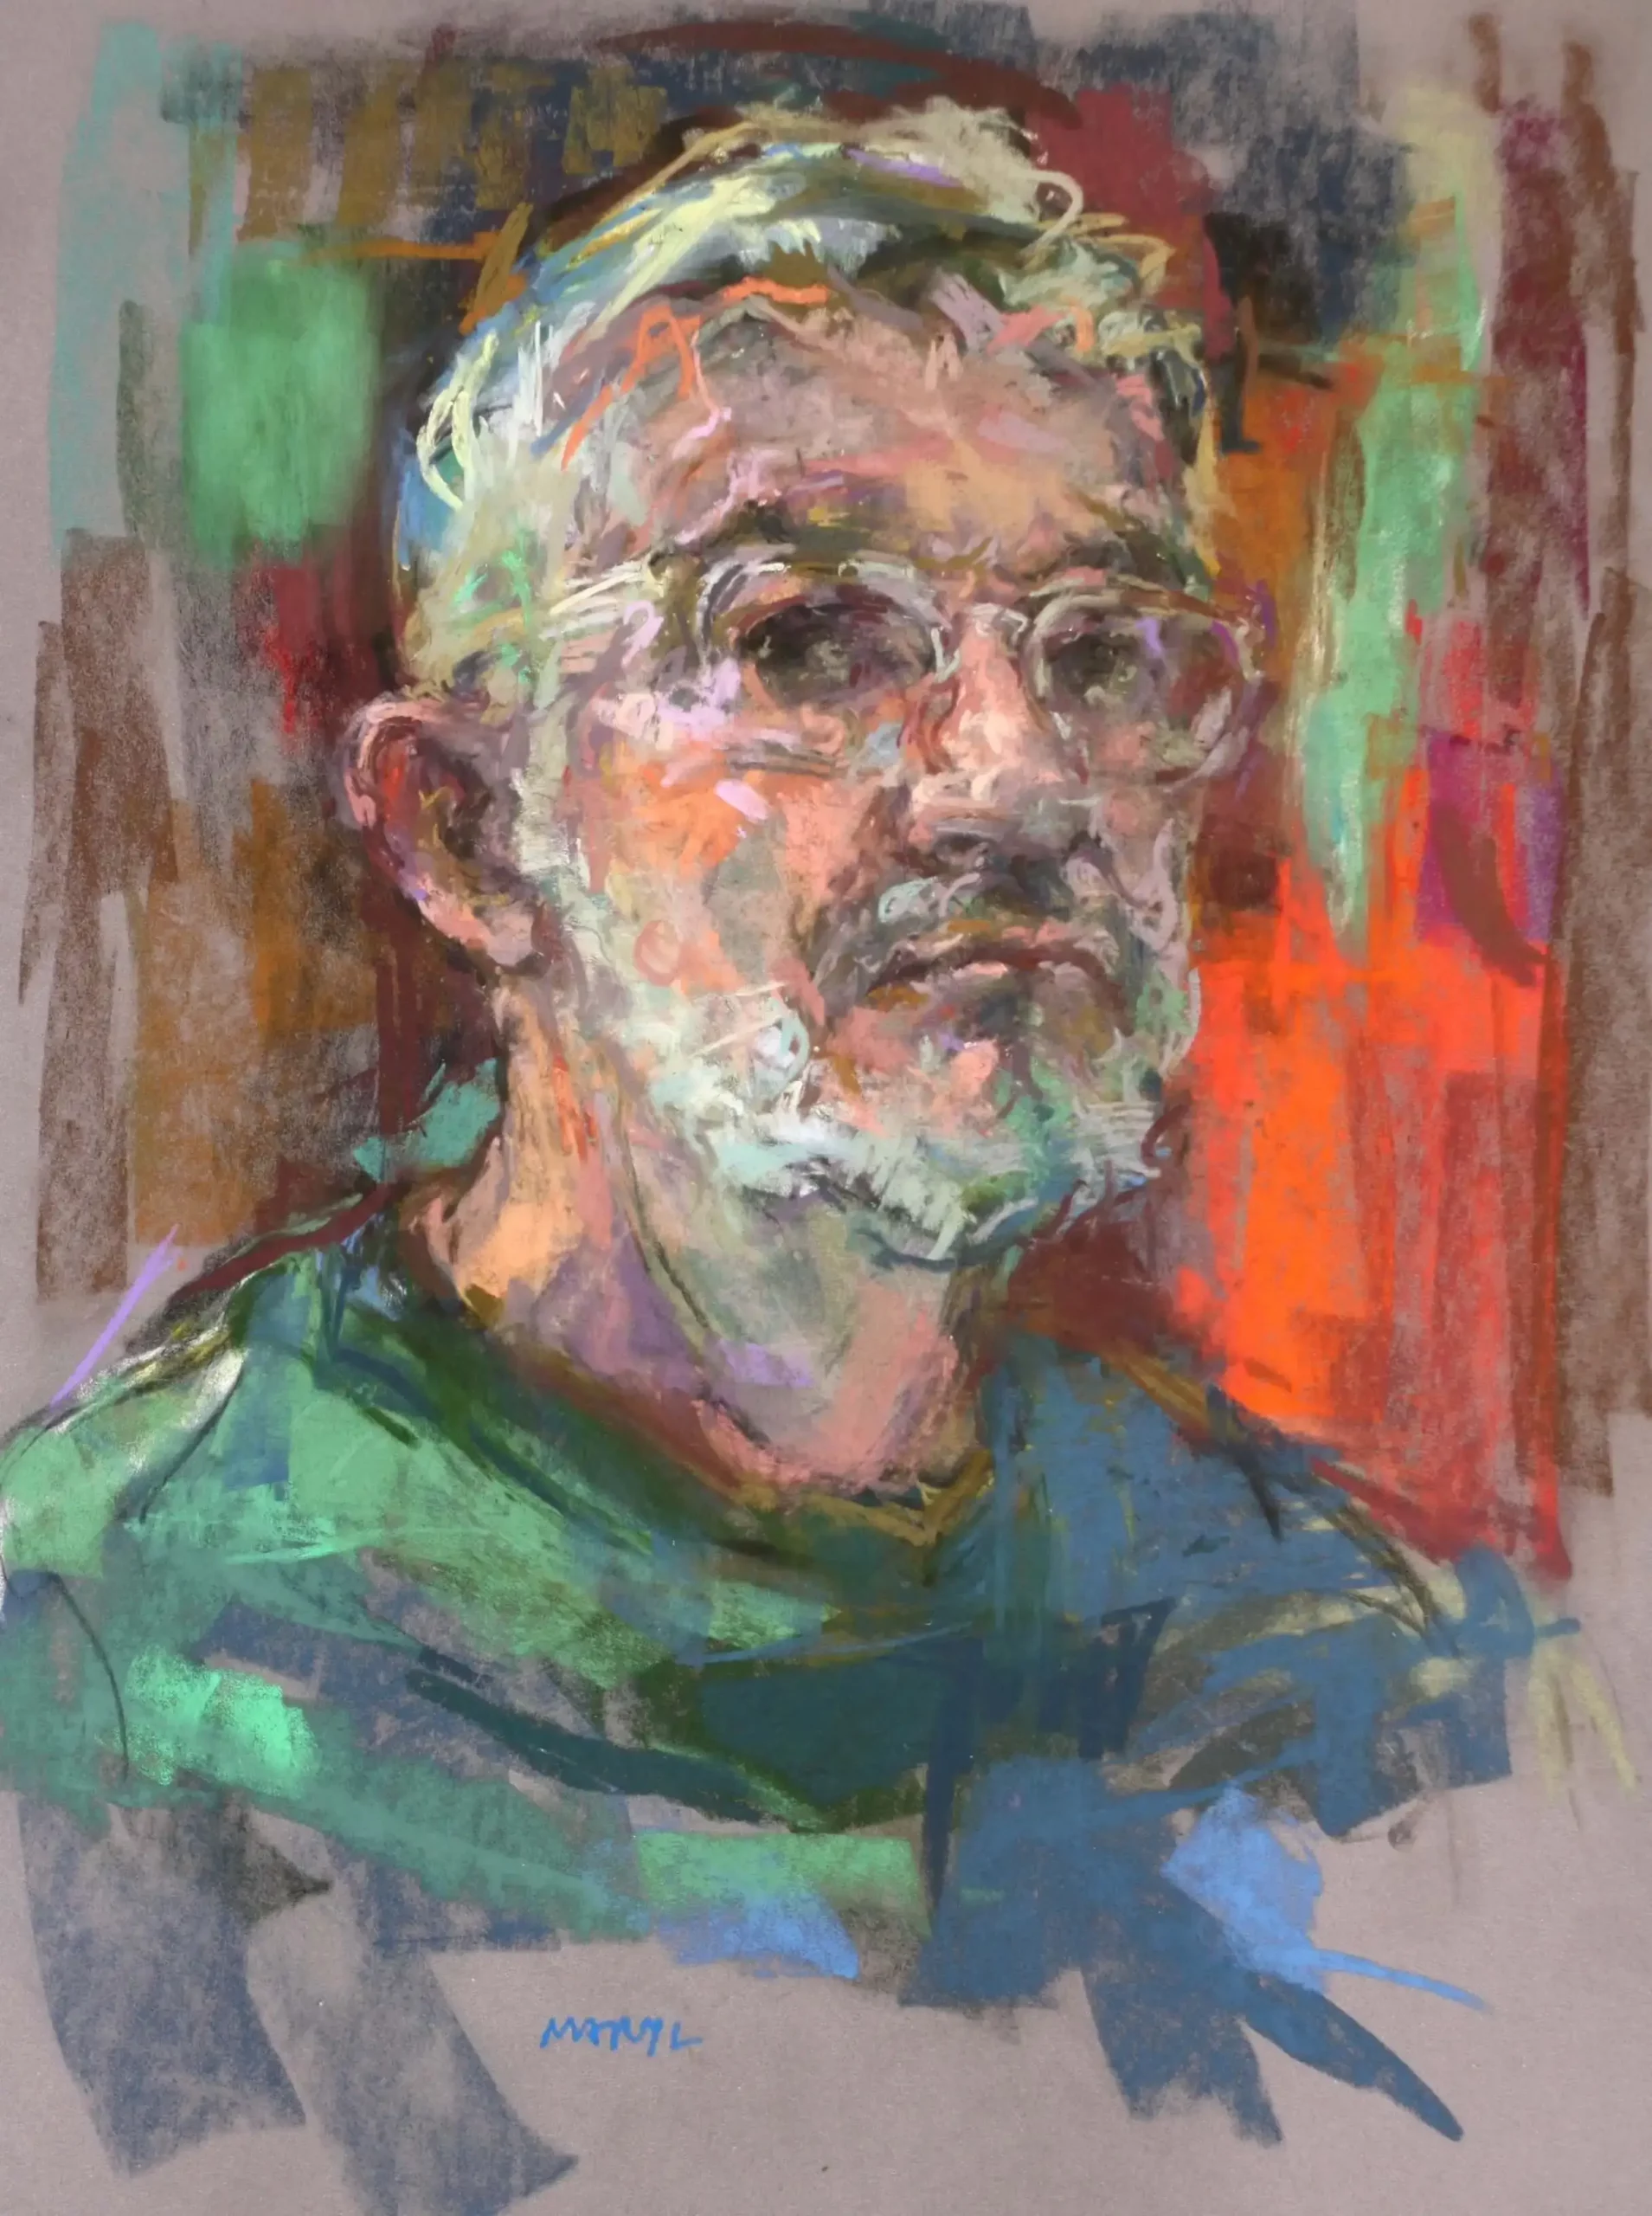 blandine-maryl-portrait-phil-pastel-2022